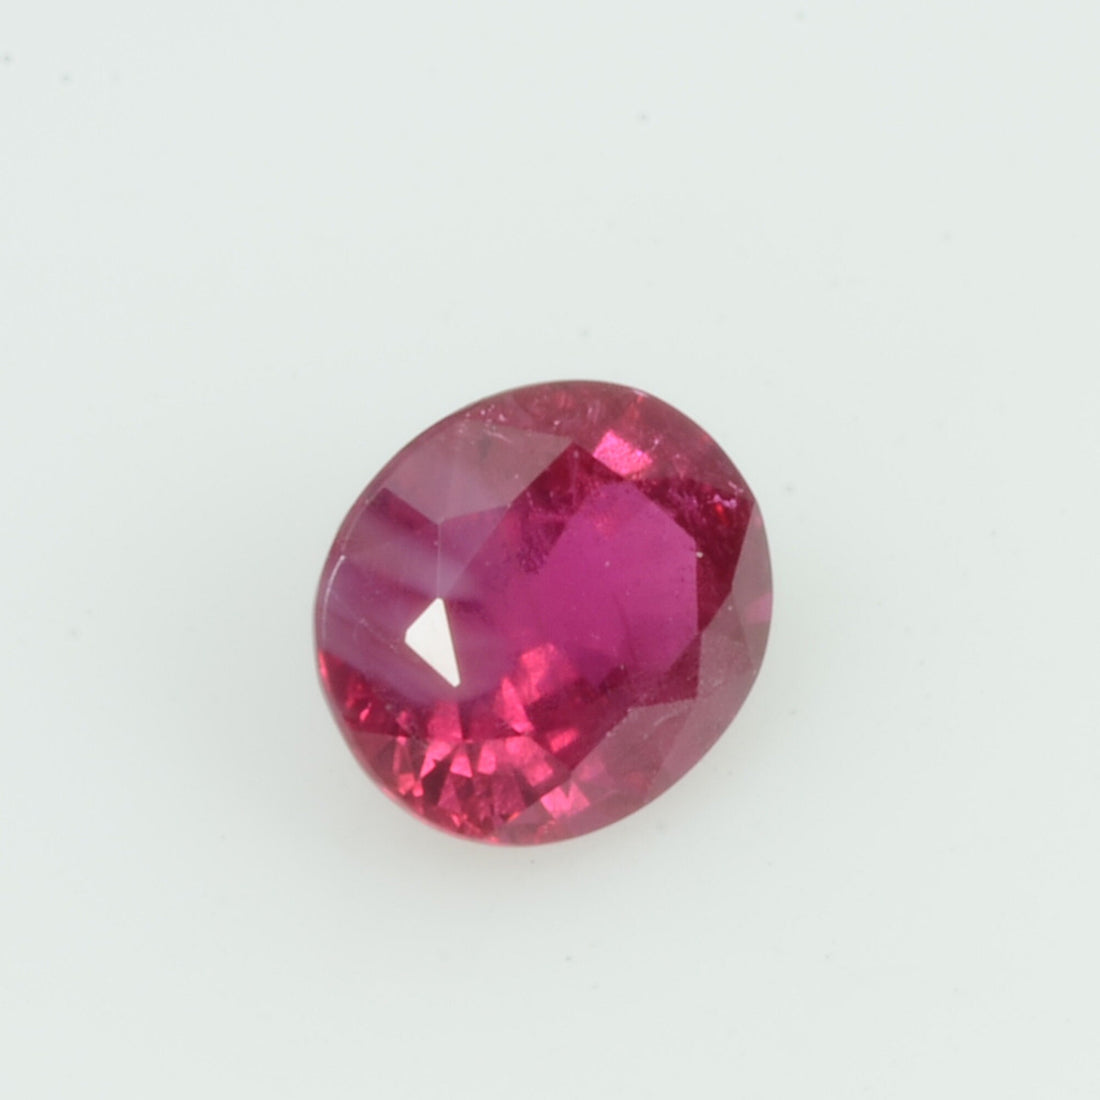 0.70 Cts Natural Burma Ruby Loose Gemstone Oval Cut